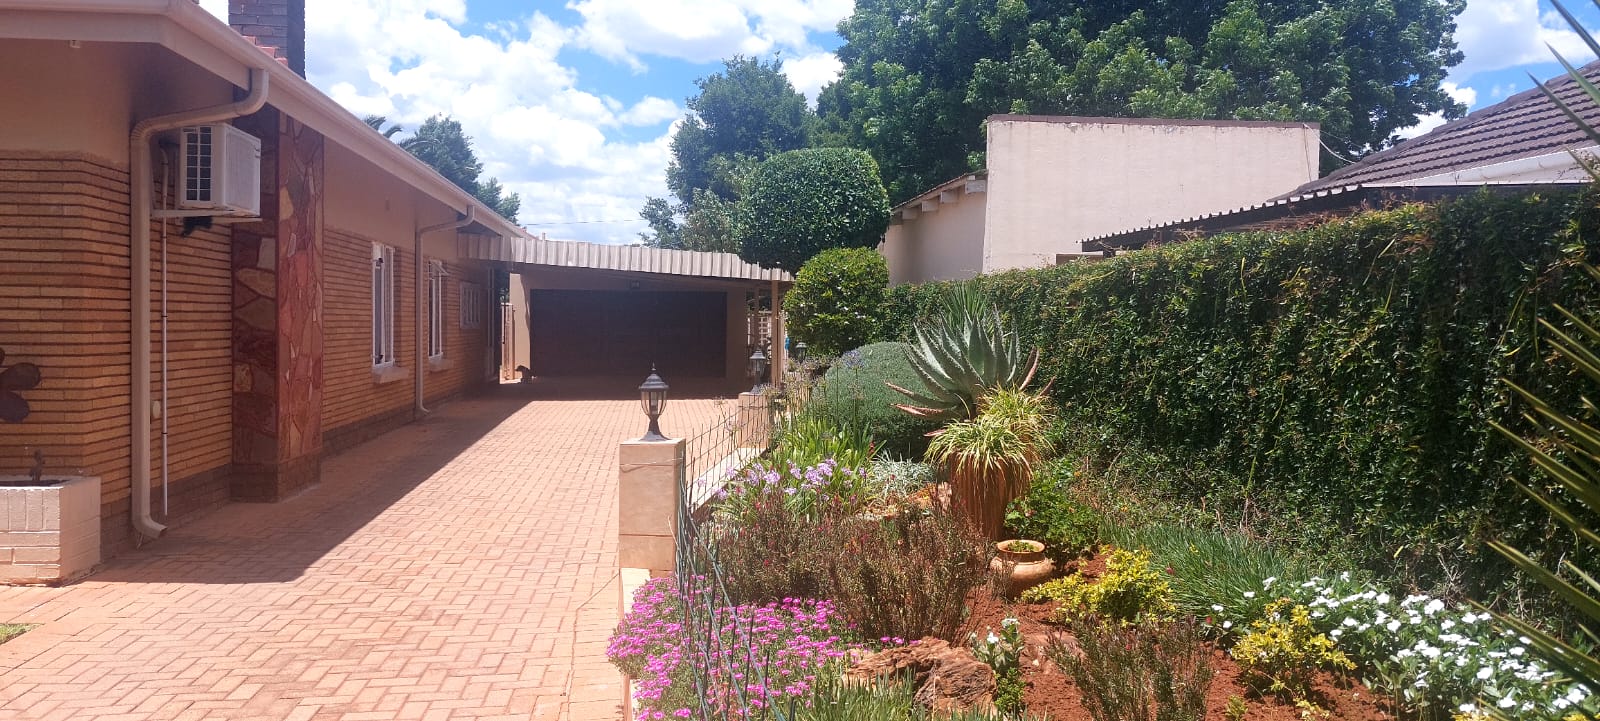 House in Potchefstroom Central - d0fa4ec9-ab81-4244-abd5-409c875cf783.jpg